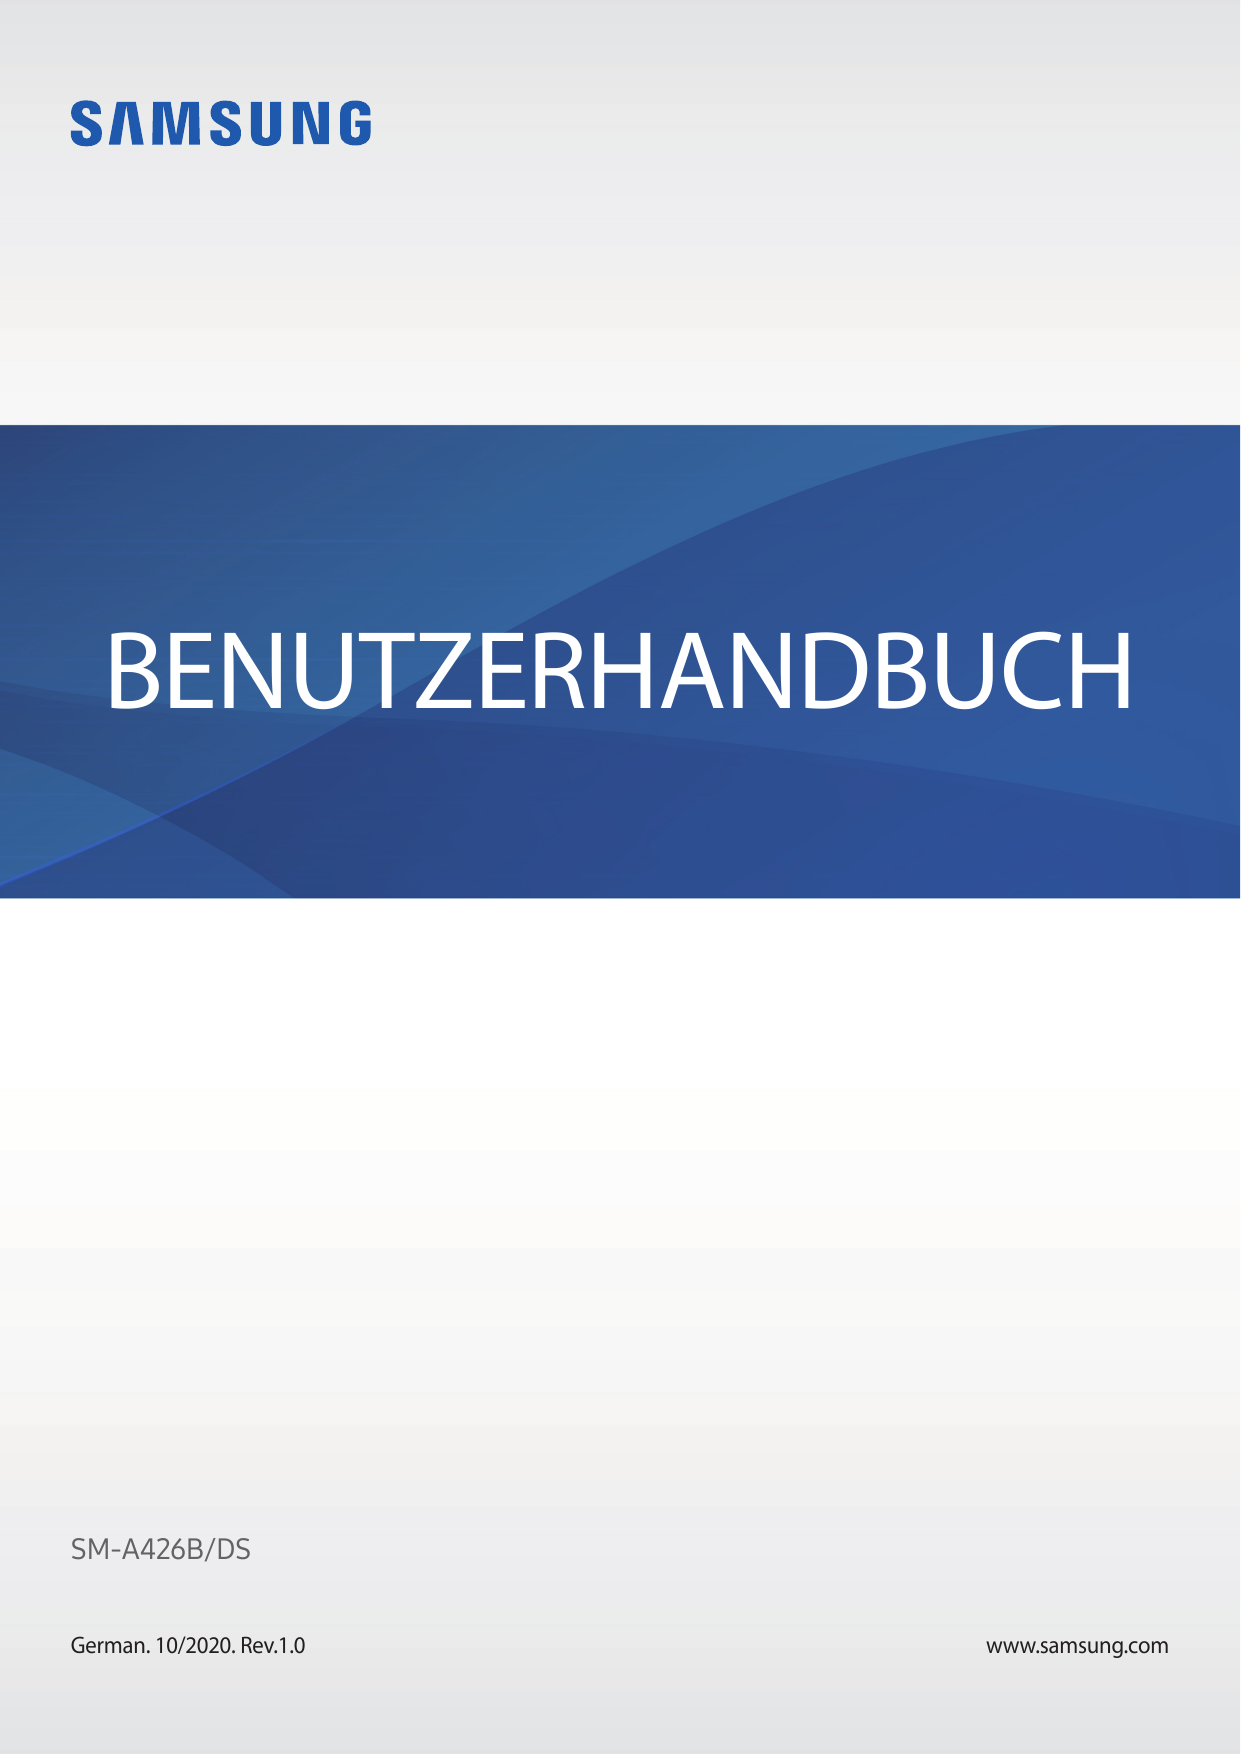 BENUTZERHANDBUCHSM-A426B/DSGerman. 10/2020. Rev.1.0www.samsung.com